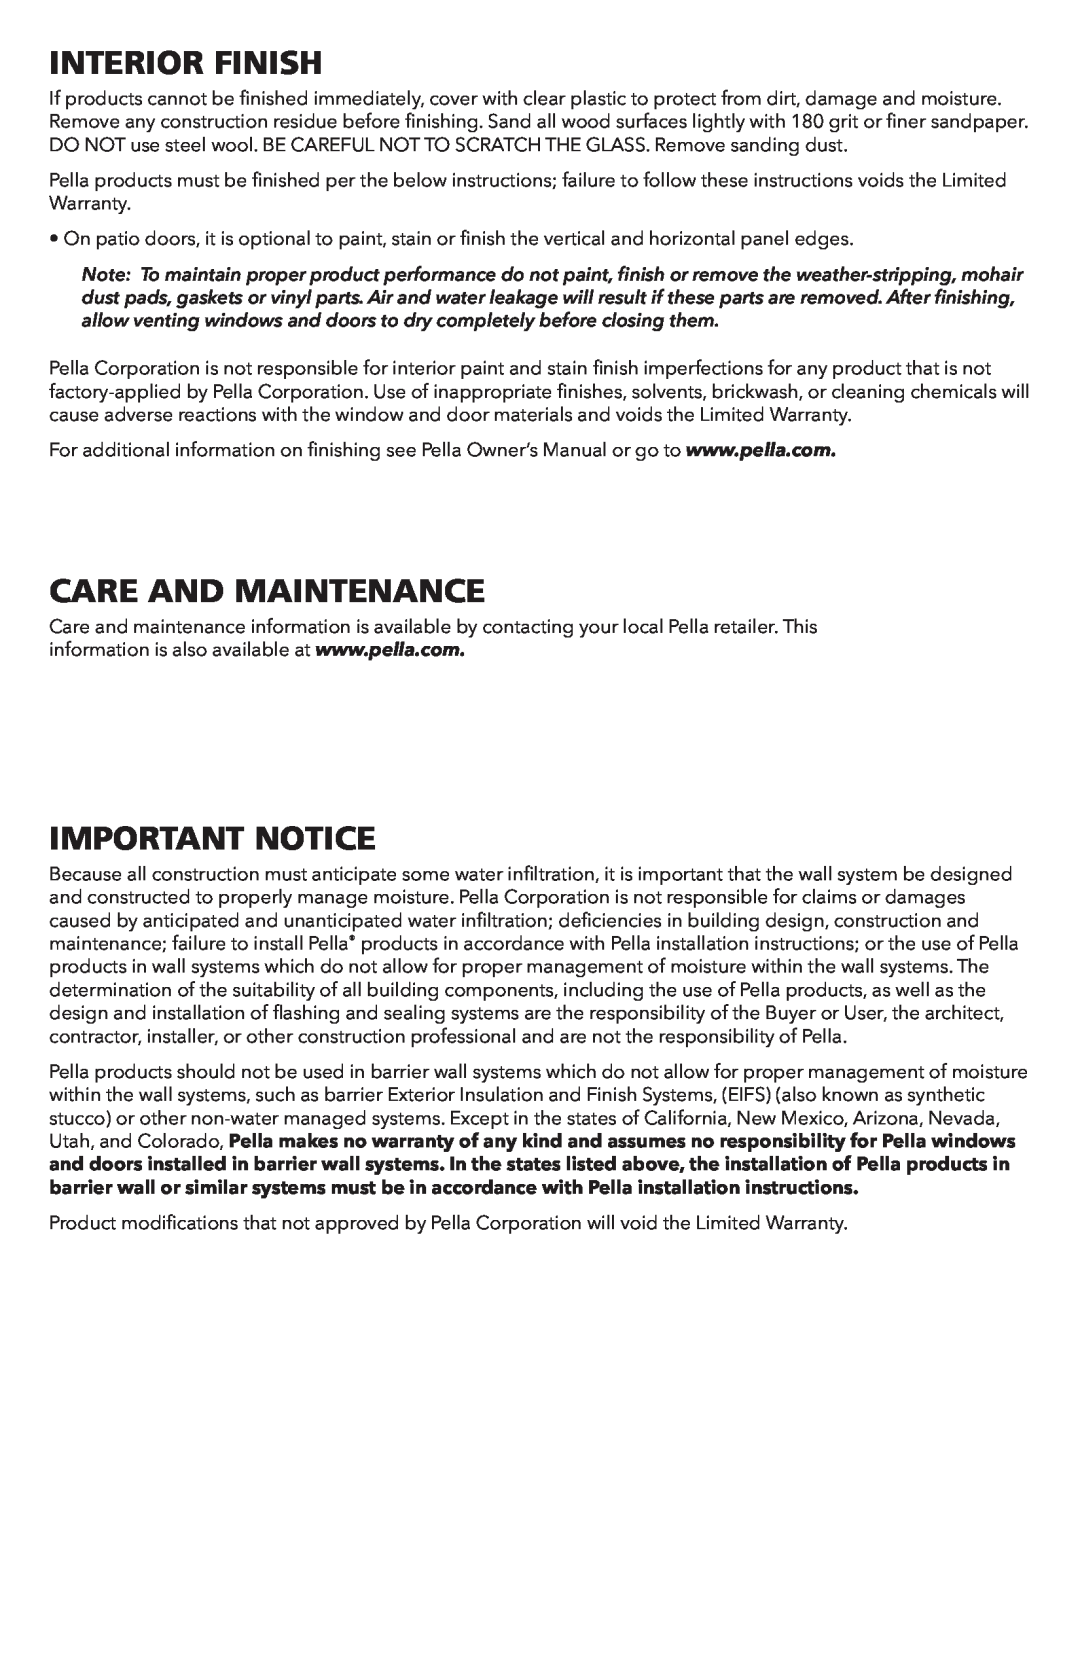 Pella 81CM0100 installation instructions Interior Finish, Care And Maintenance, Important Notice 